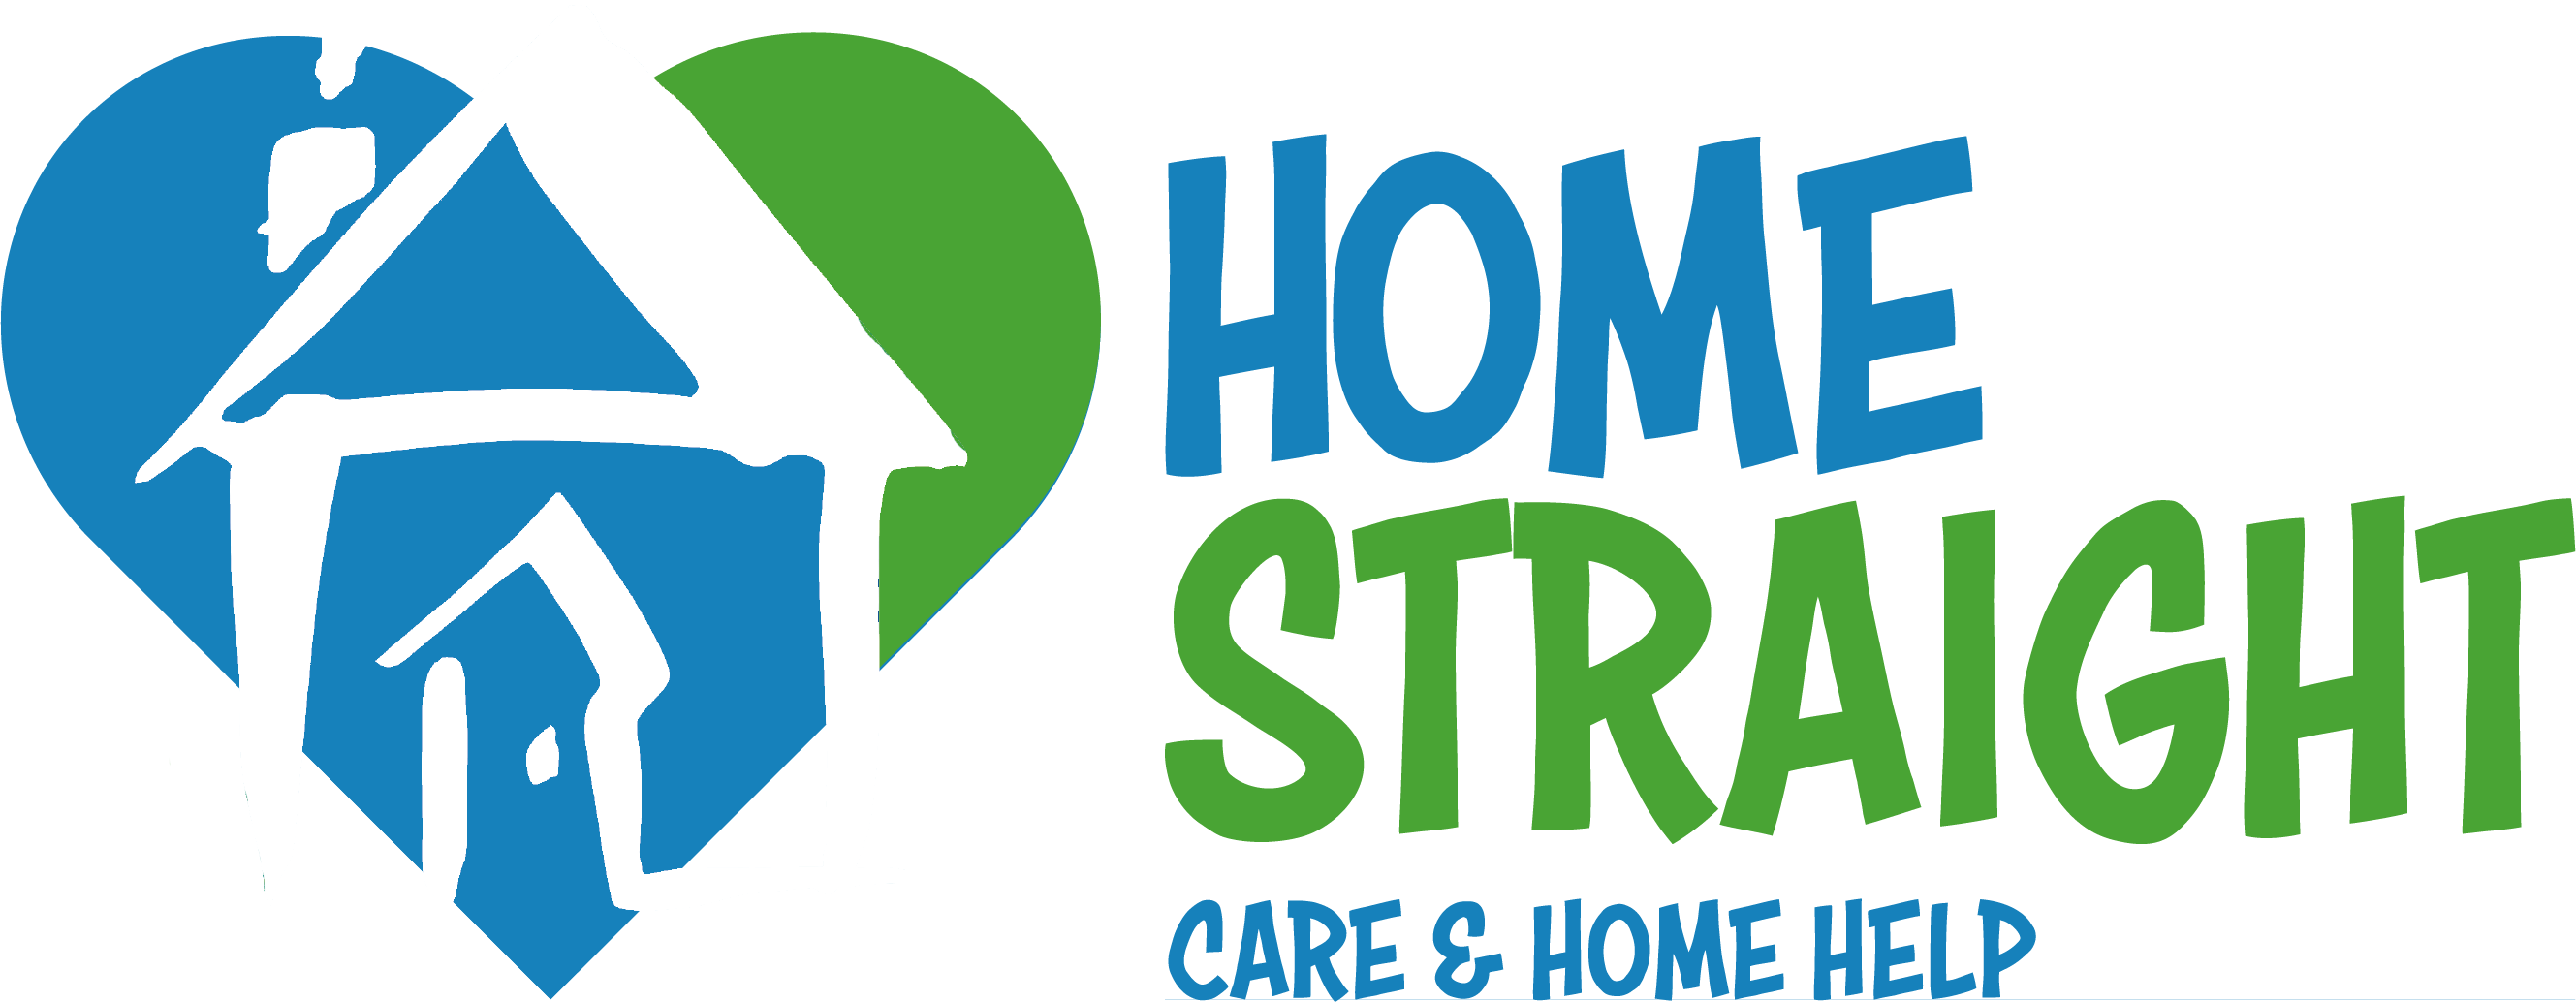 logo for Home straight